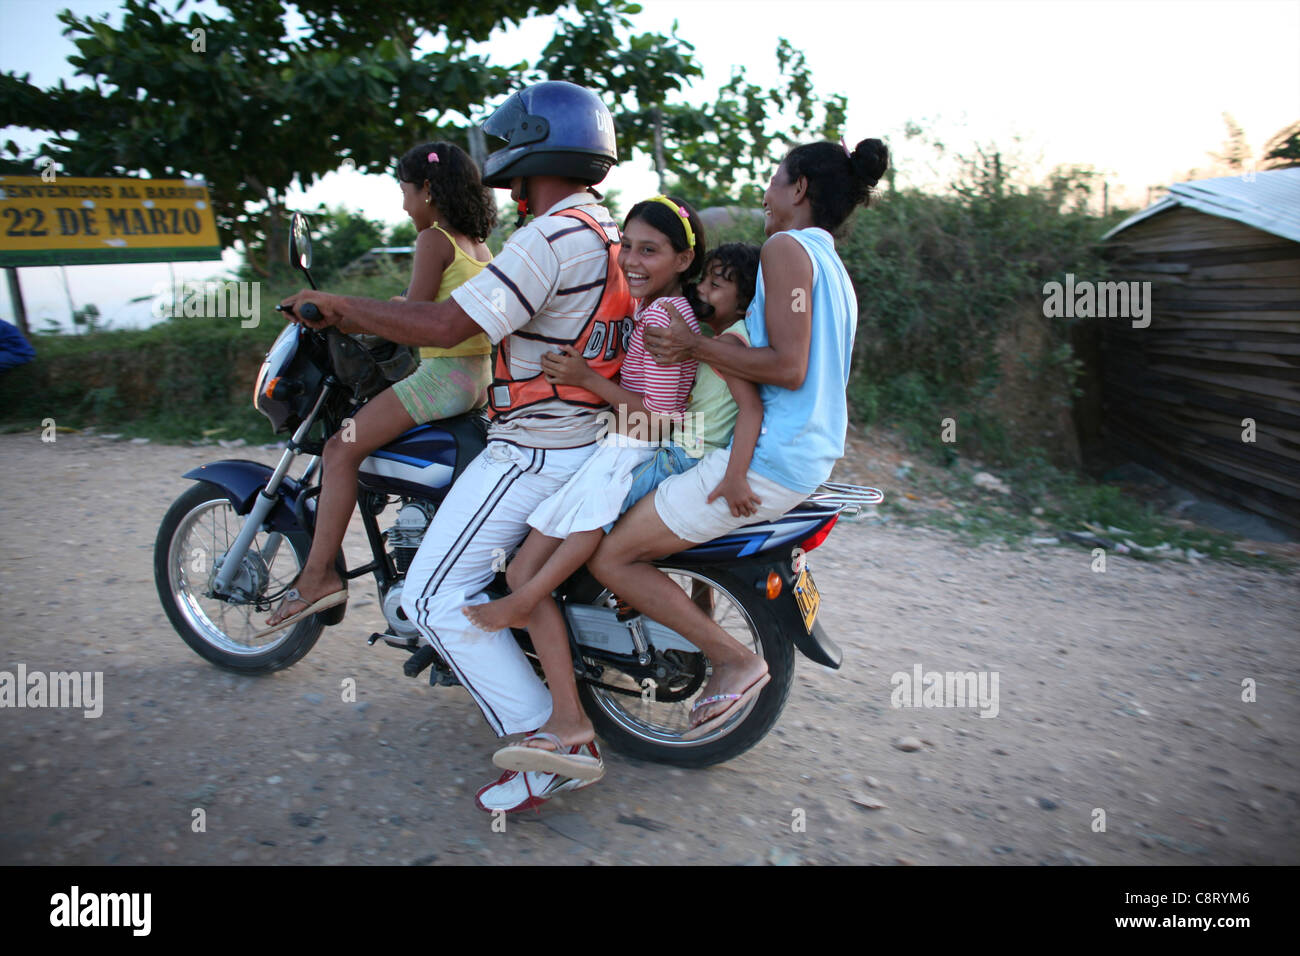 life in a slum, colombia Stock Photo